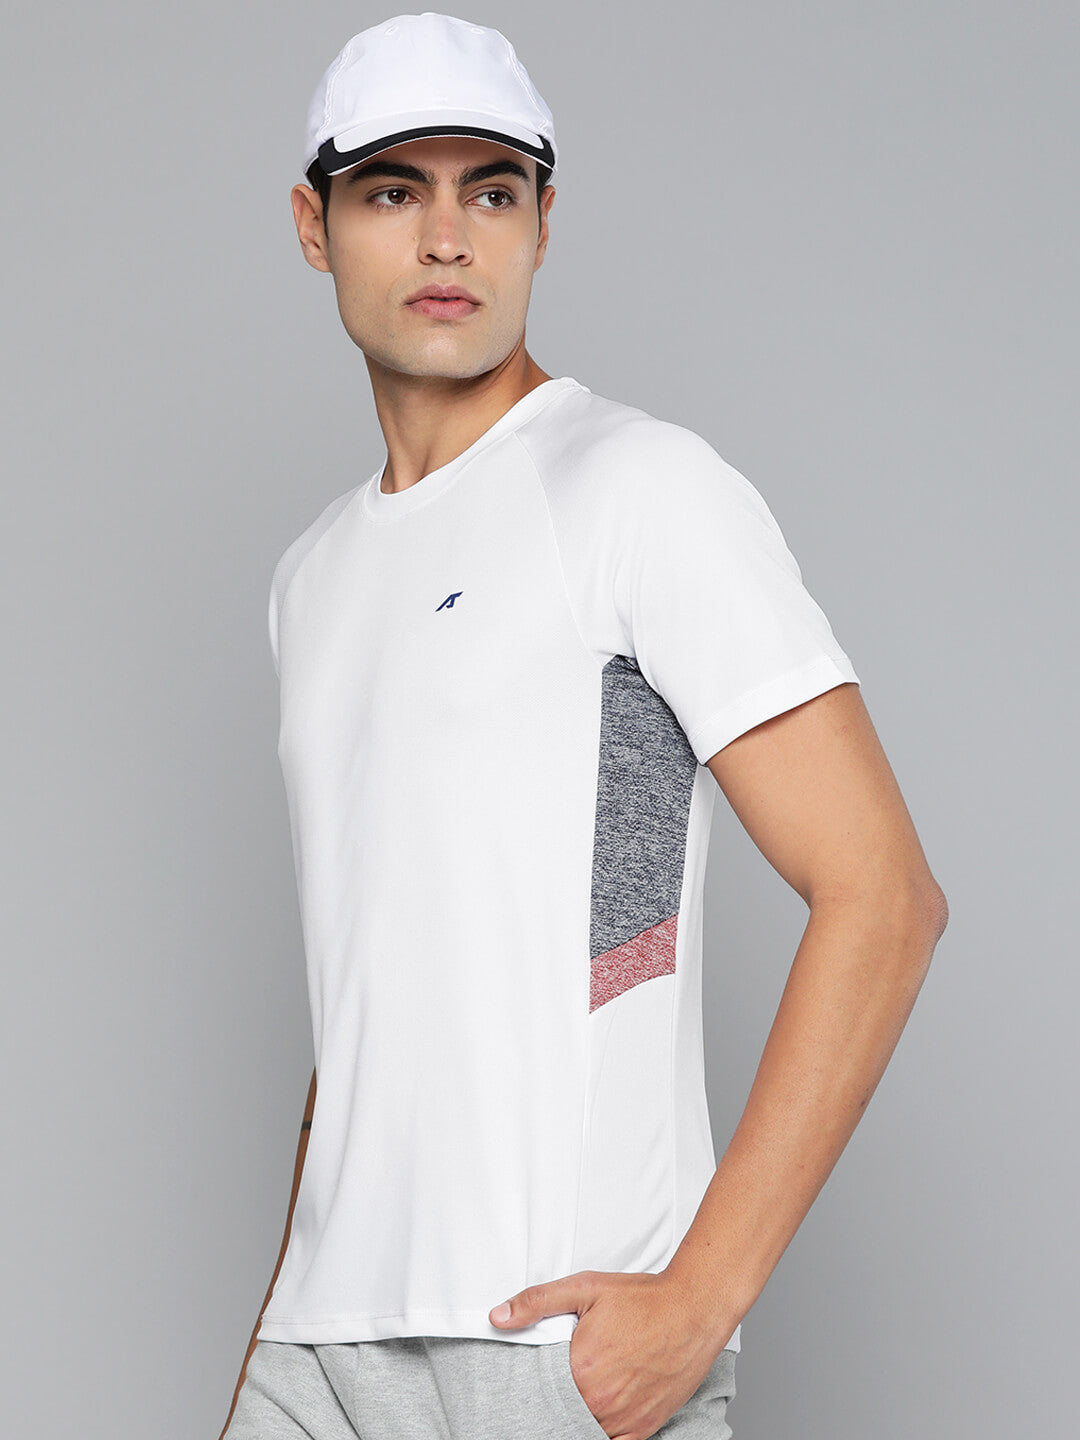 Alcis Men White Grey Colourblocked Dry Tech Slim Fit Sports T-shirt